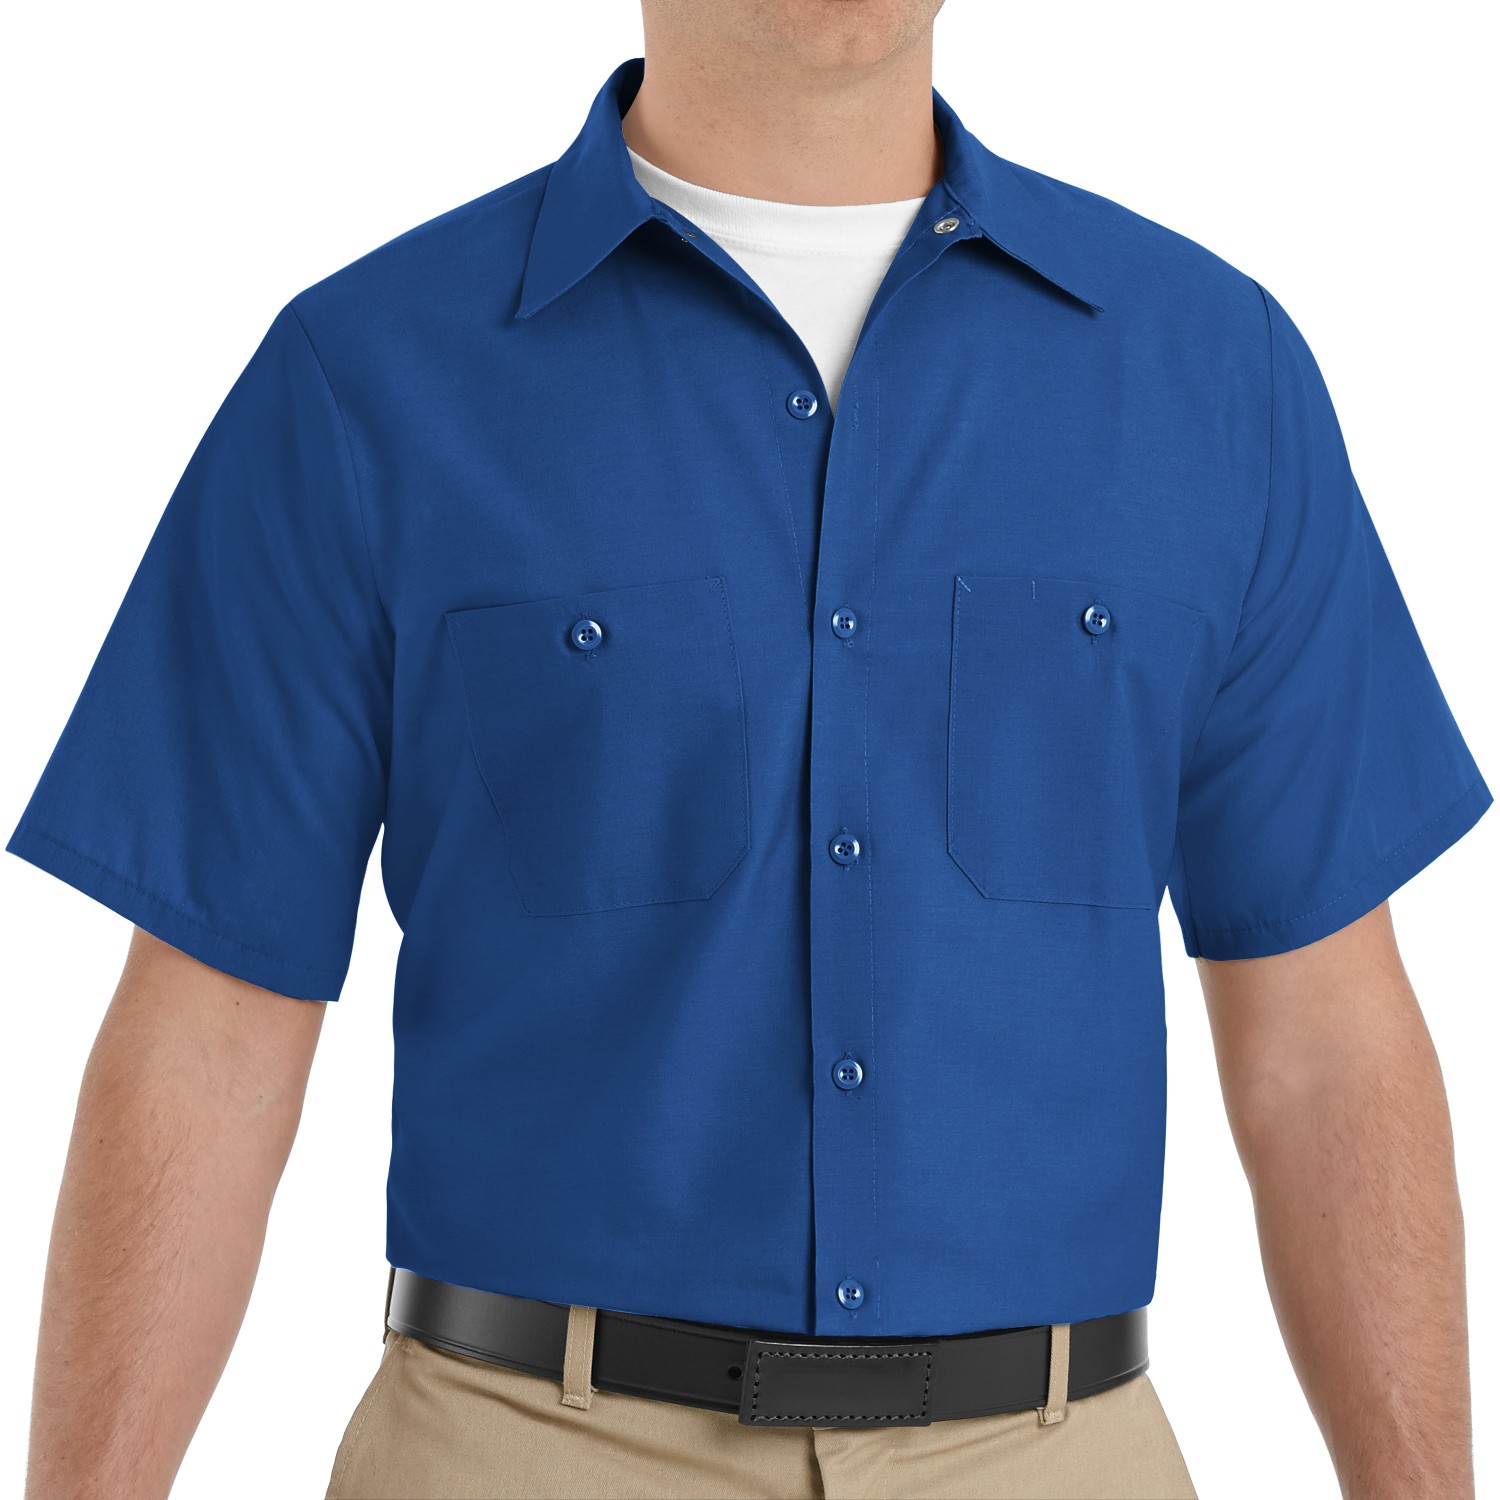 Lot of 3 Mens Short Sleeve  Blue Work Uniform Shirt XLarge 2BY4 Clothes 